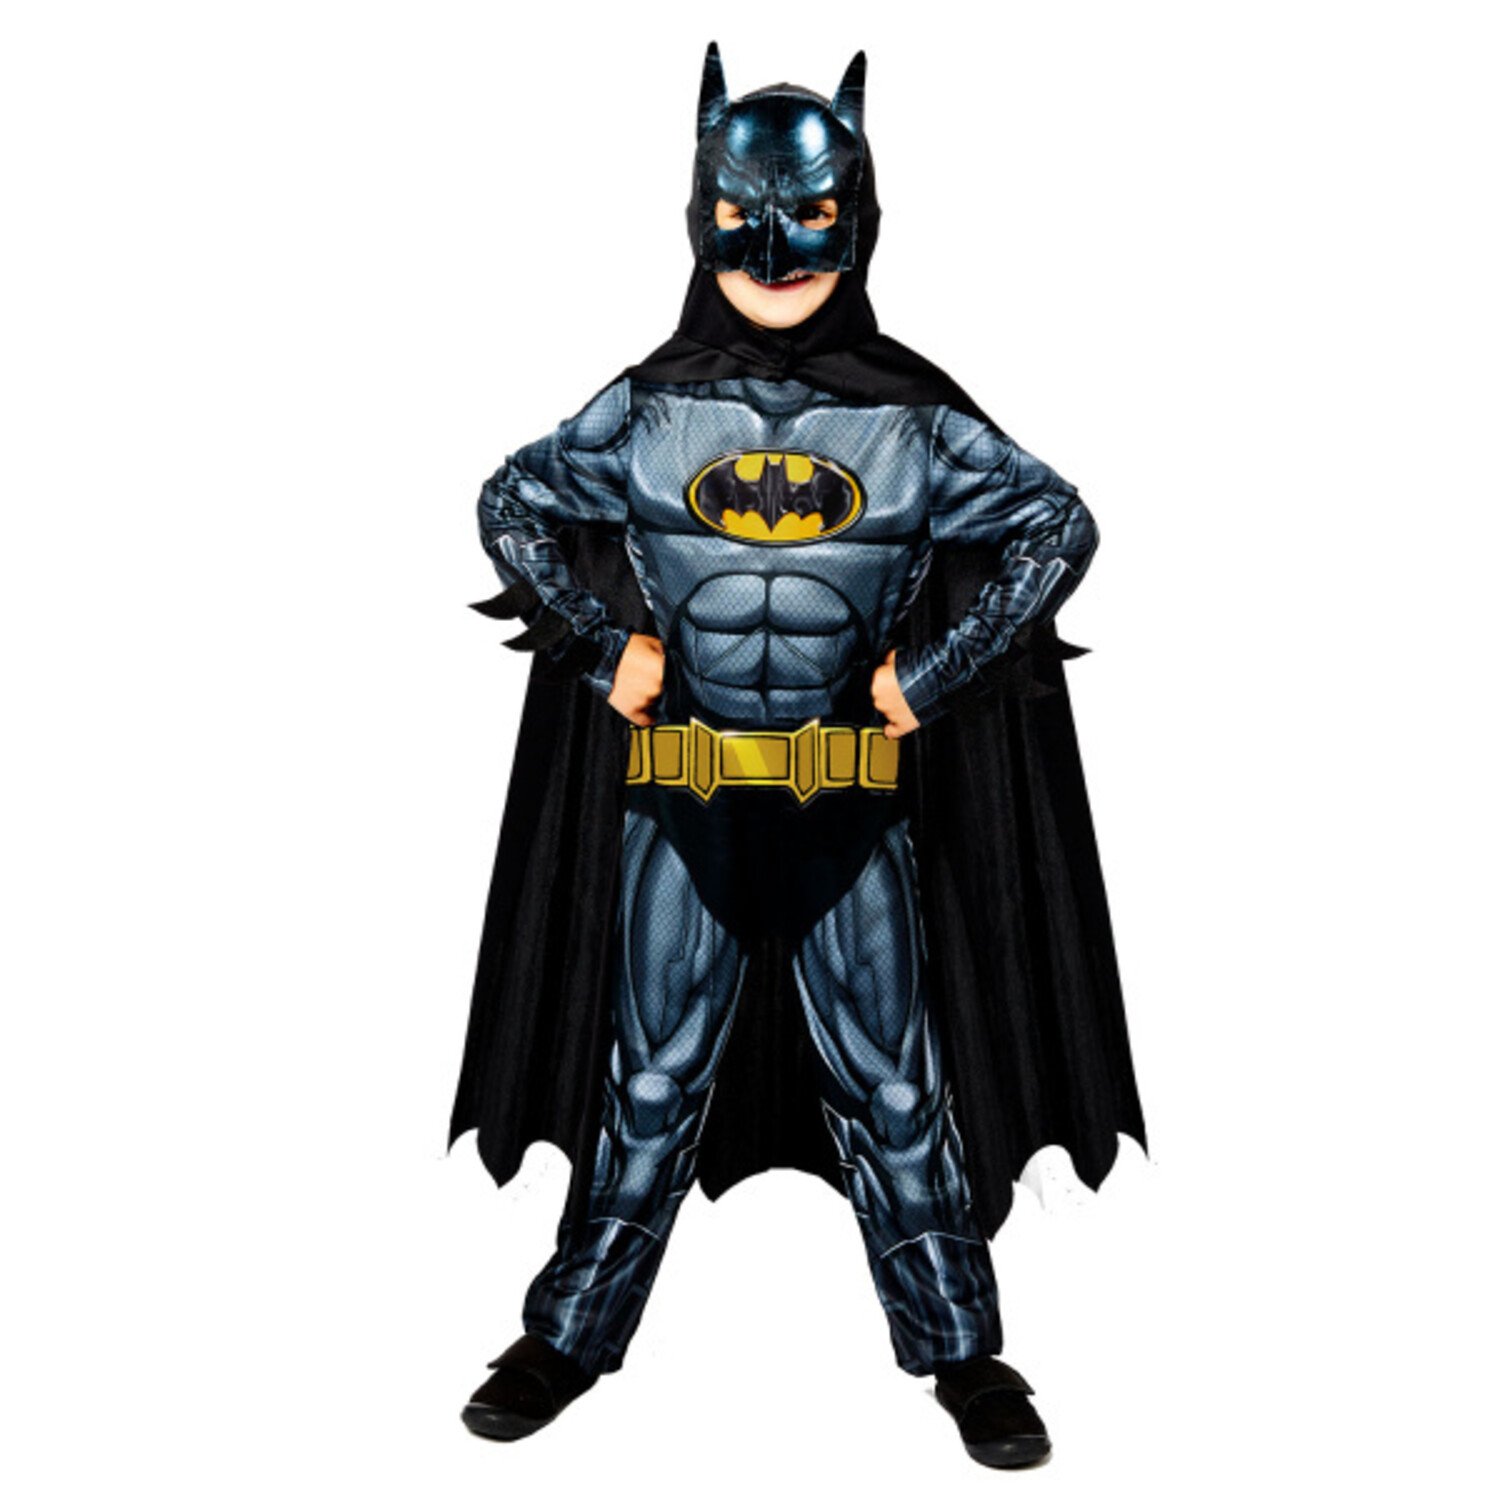 Batman Disfraz Niño - Foto gratis en Pixabay - Pixabay